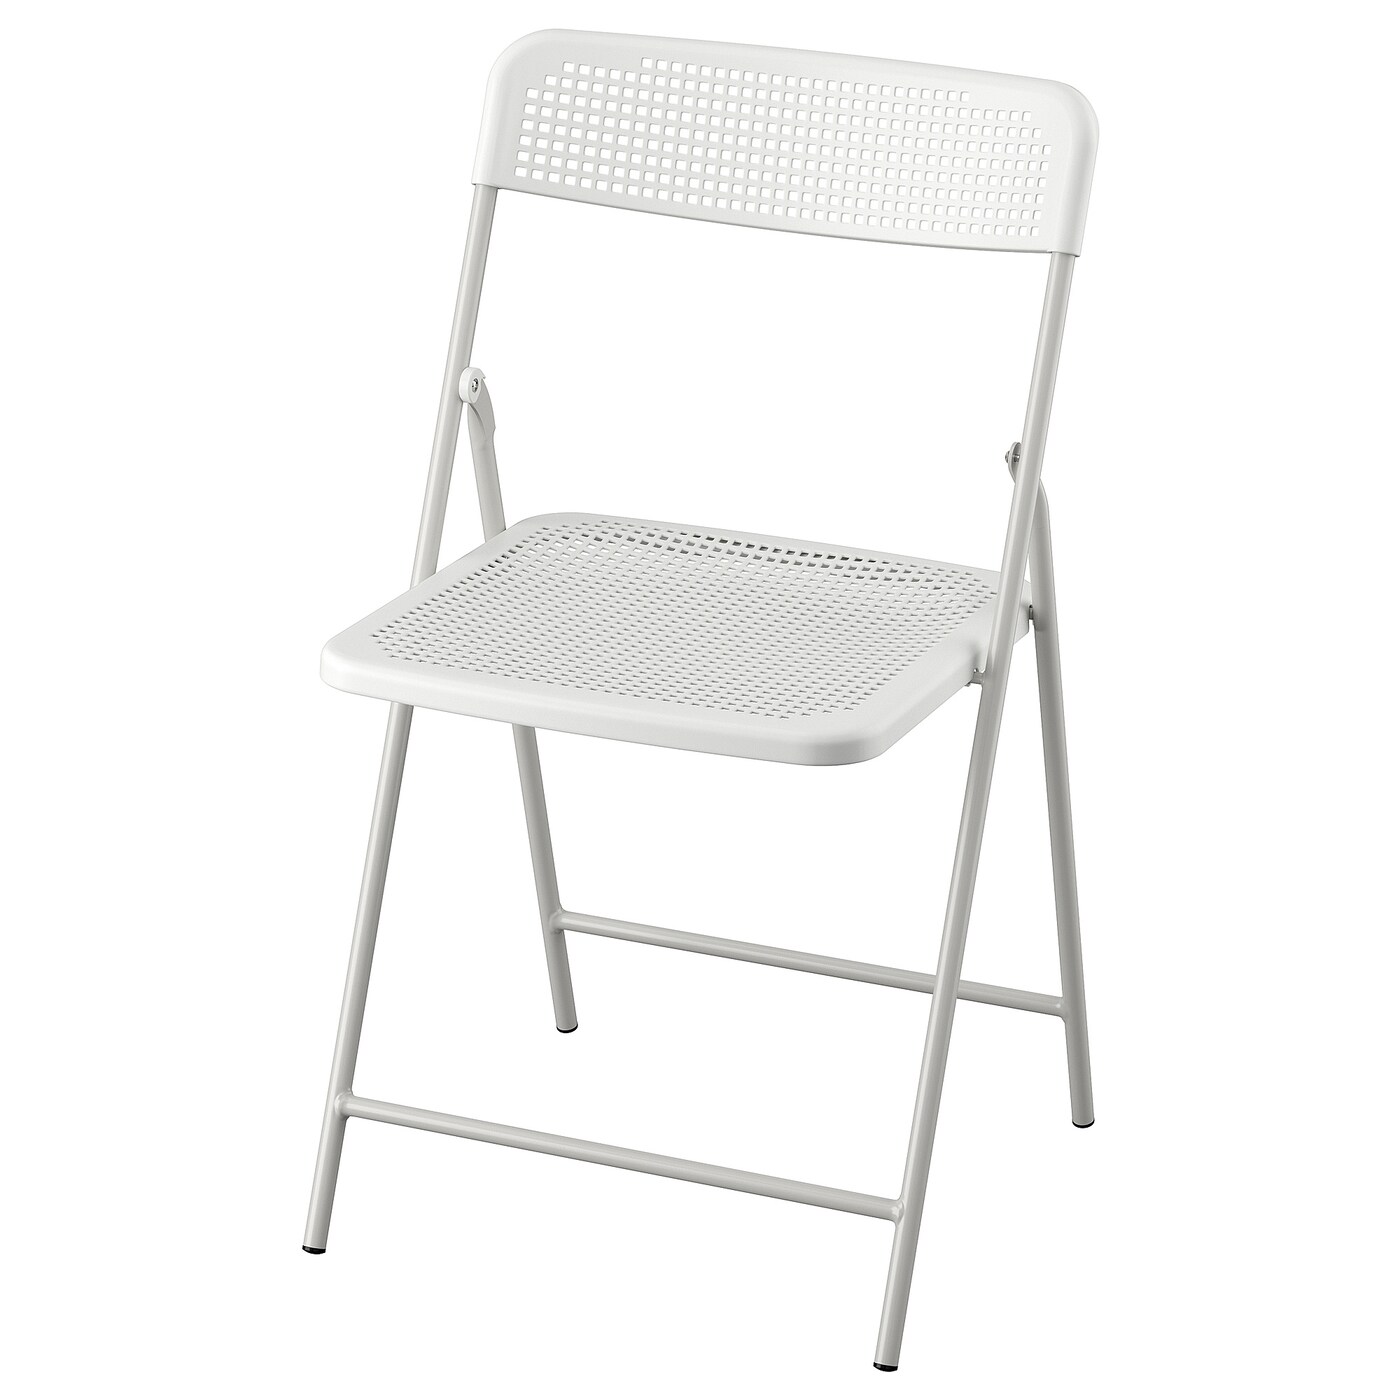 Складной стул - IKEA TORPARÖ, 78x39x44см, белый, ТОРПАРЁ ИКЕА